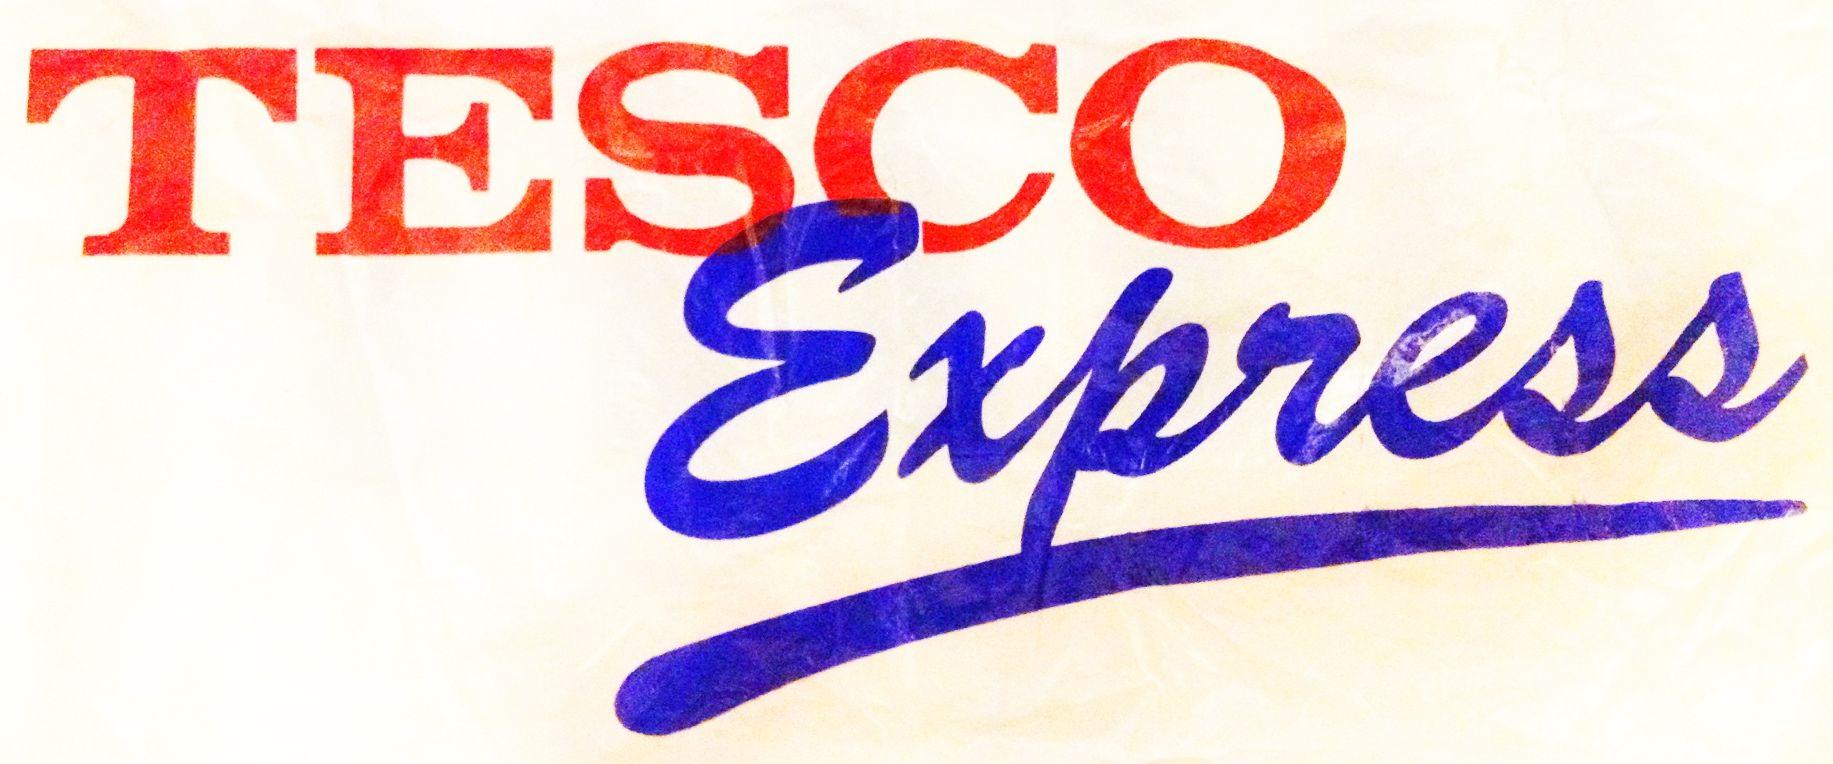 Tesco Logo - Tesco Express | Logopedia | FANDOM powered by Wikia